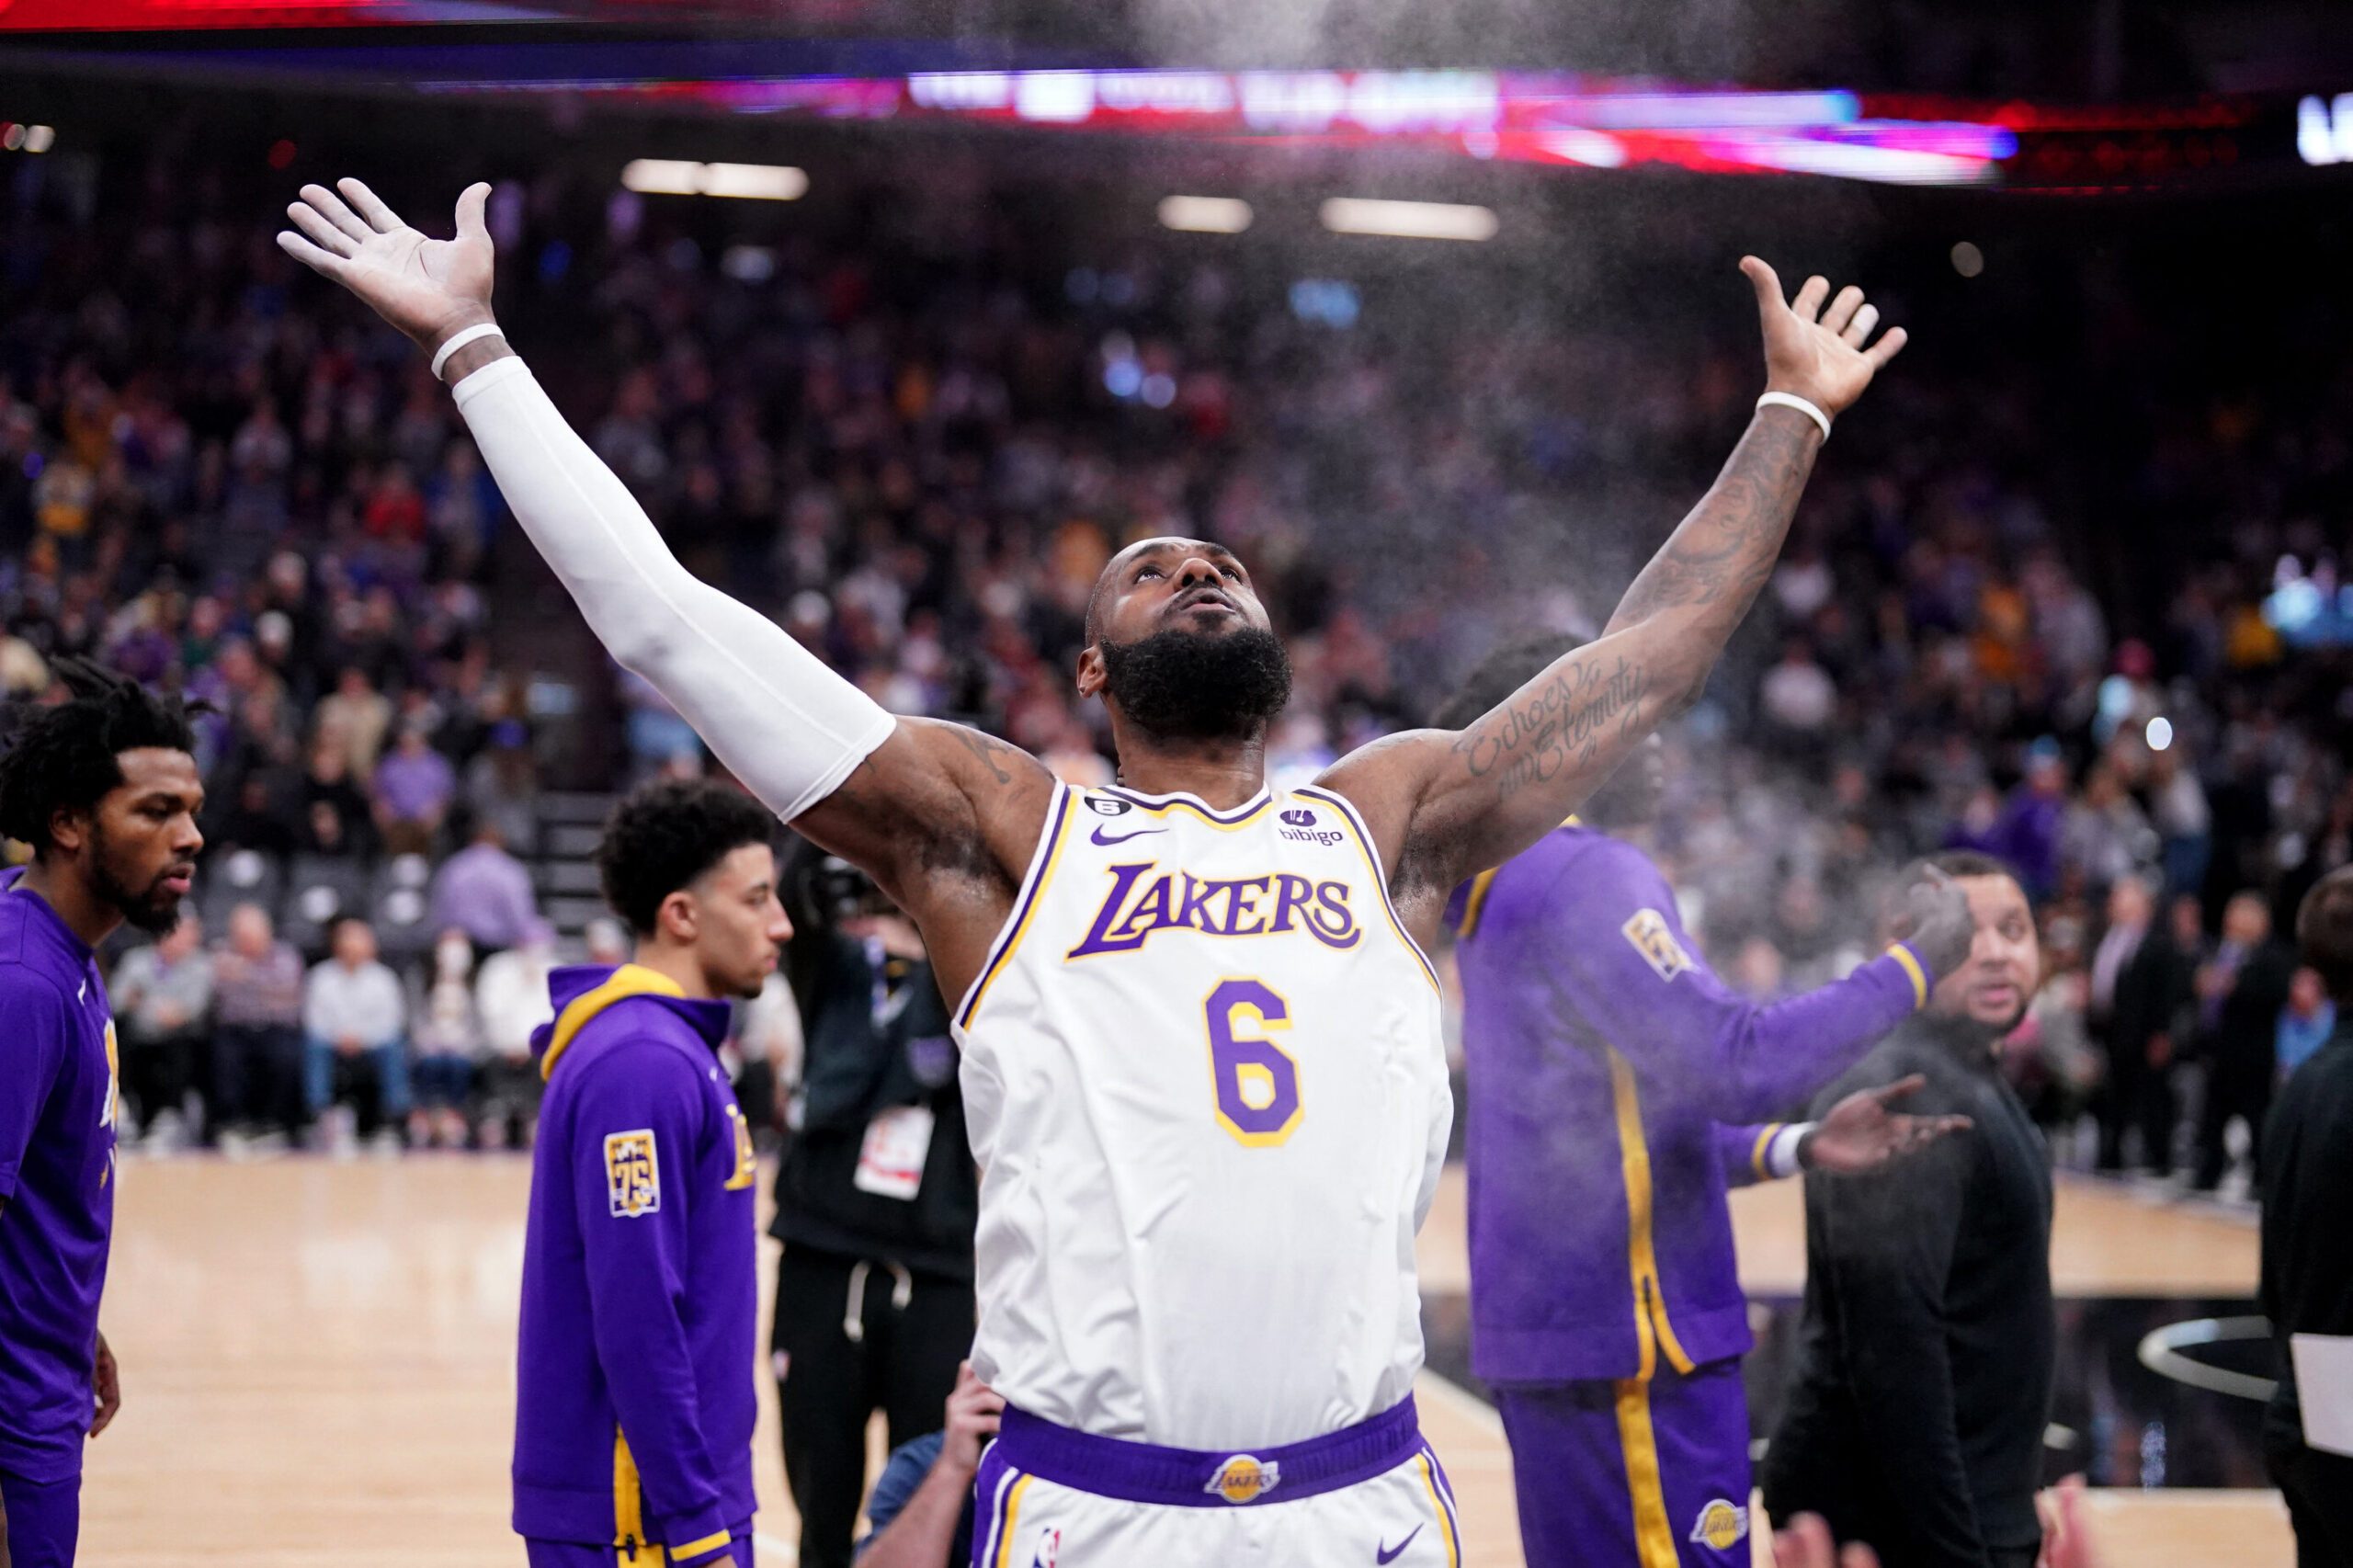 Lakers win 1st road game of season as LeBron James returns